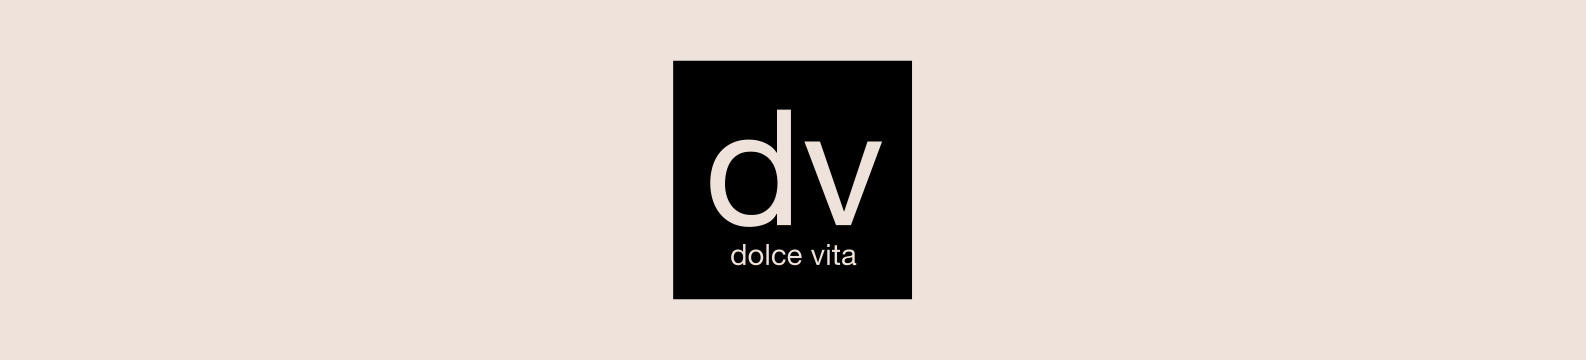 DV by Dolce Vita brand header image